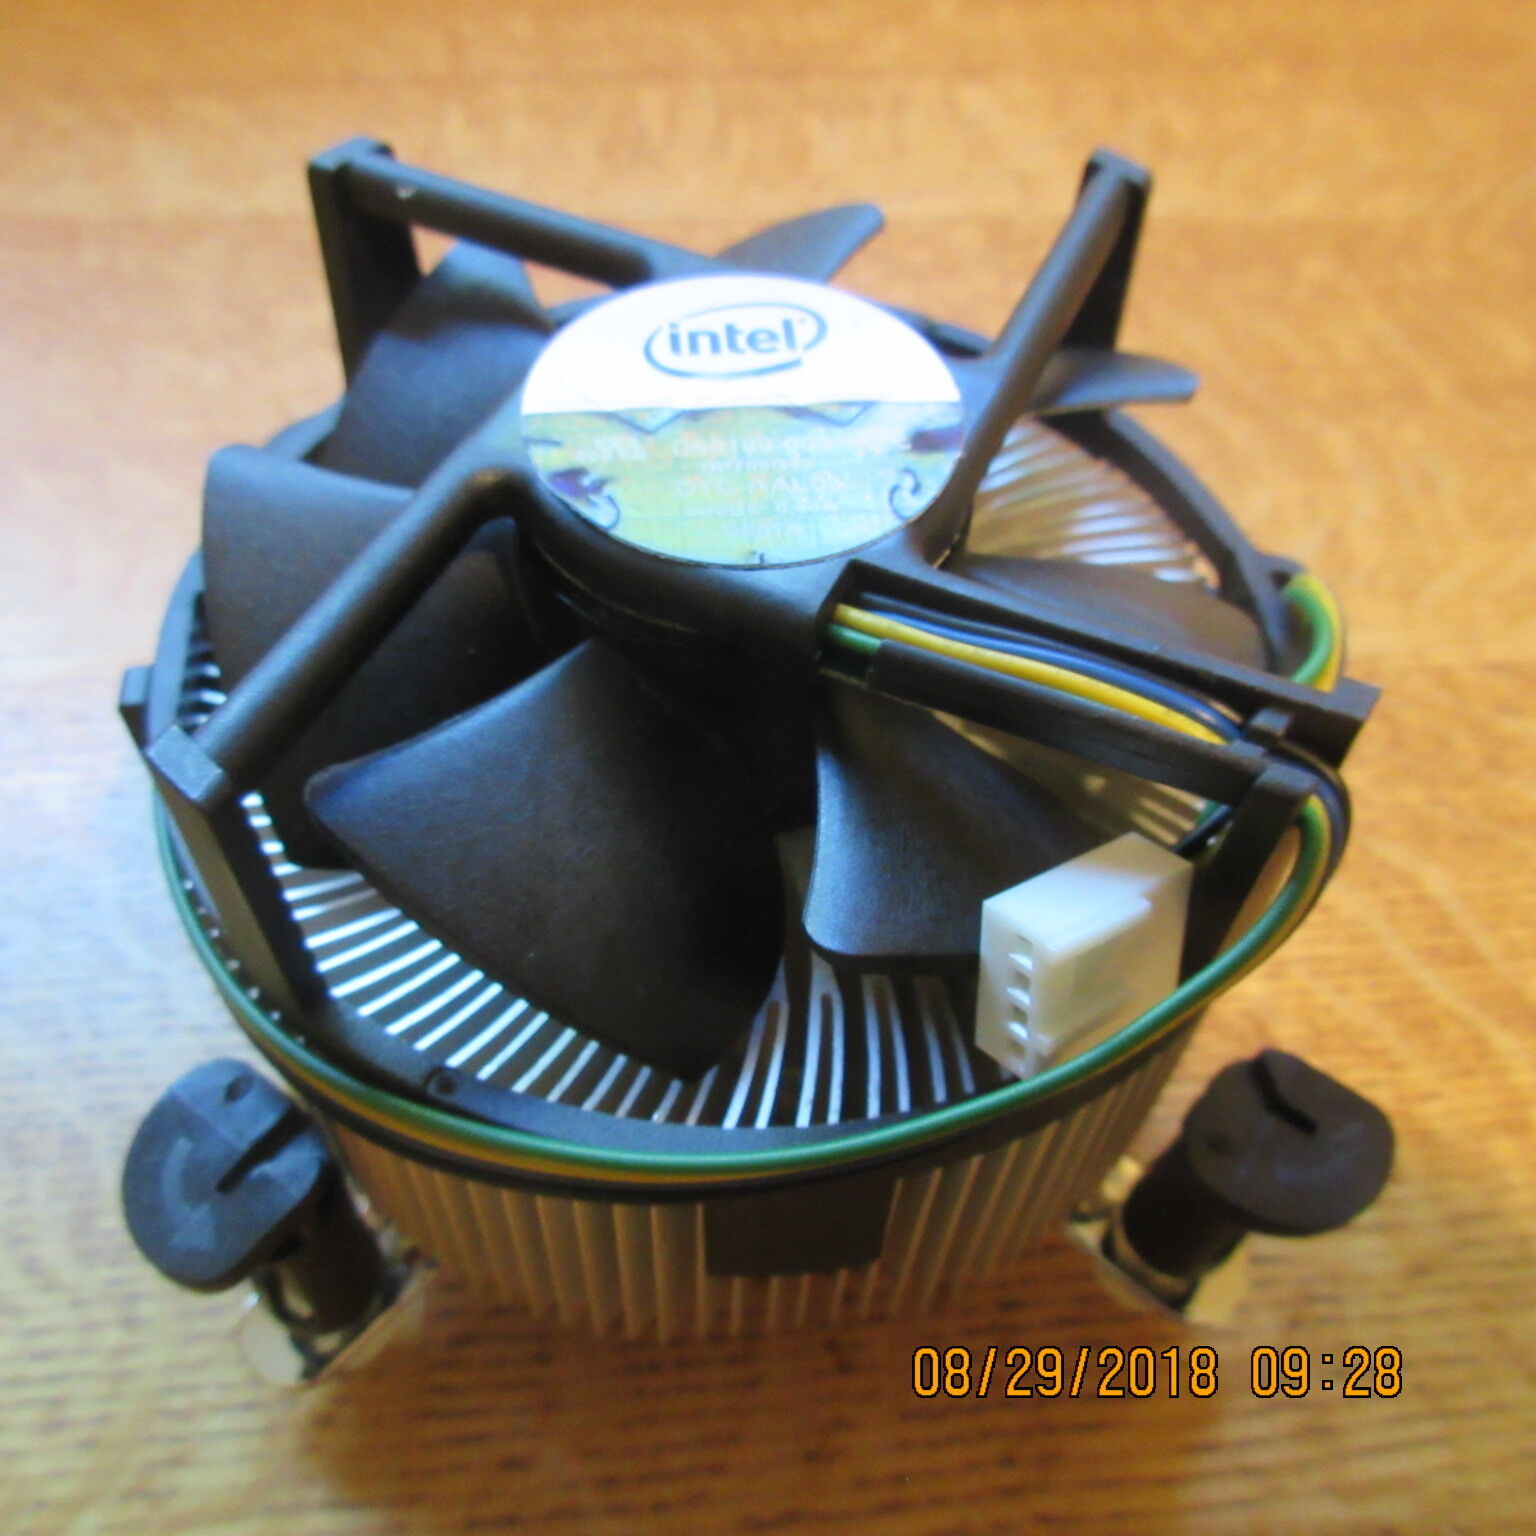 **NEW** Intel D60188-001 Socket LGA775 Copper Core CPU Heat Sink and Fan